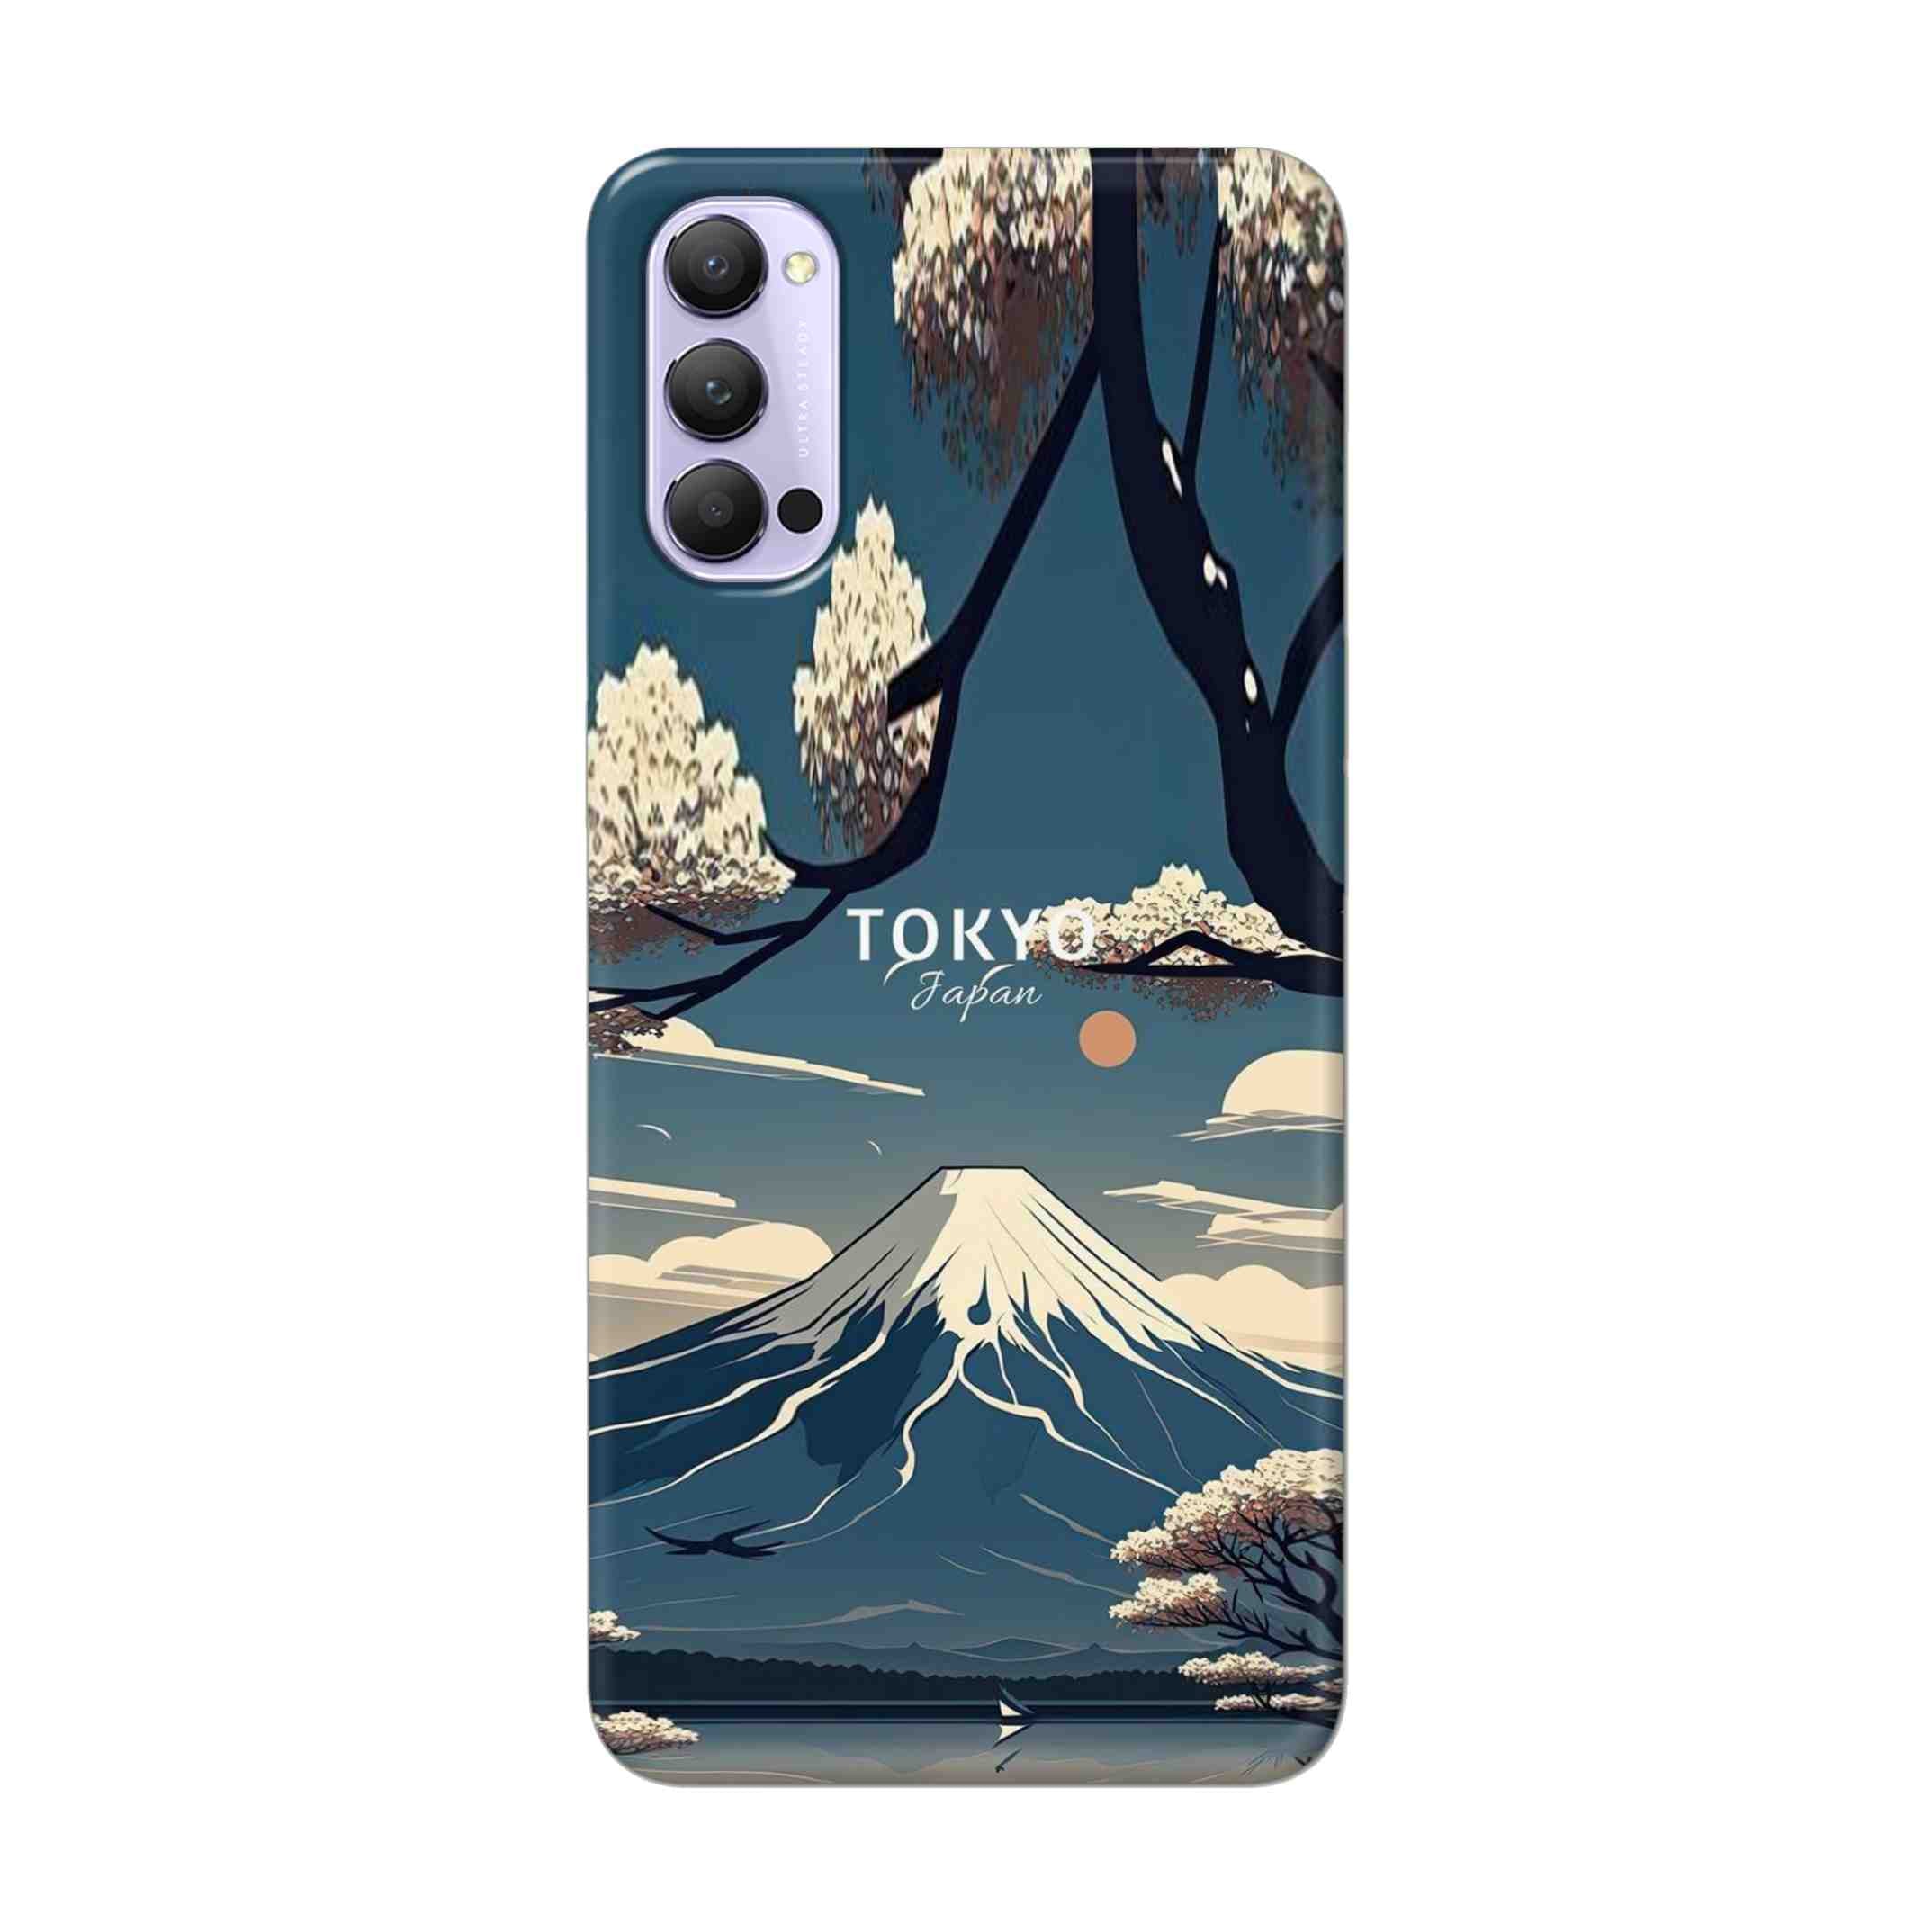 Buy Tokyo Hard Back Mobile Phone Case Cover For Oppo Reno 4 Pro Online